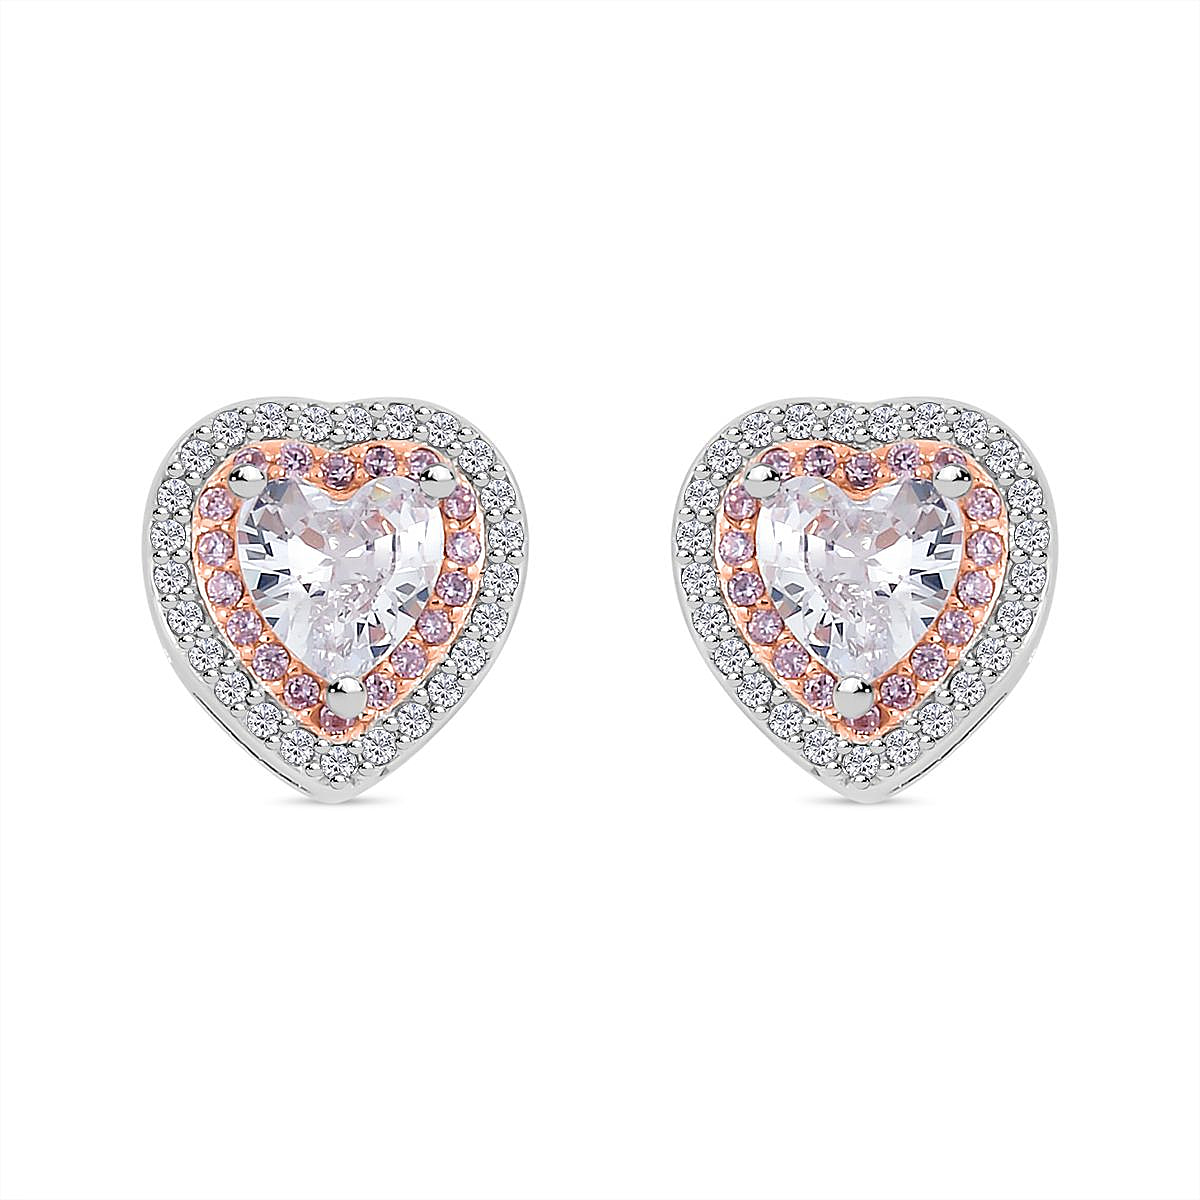 White Cubic Zirconia, Pink Cubic Zirconia Heart Earrings in Sterling Silver 2.370  Ct.